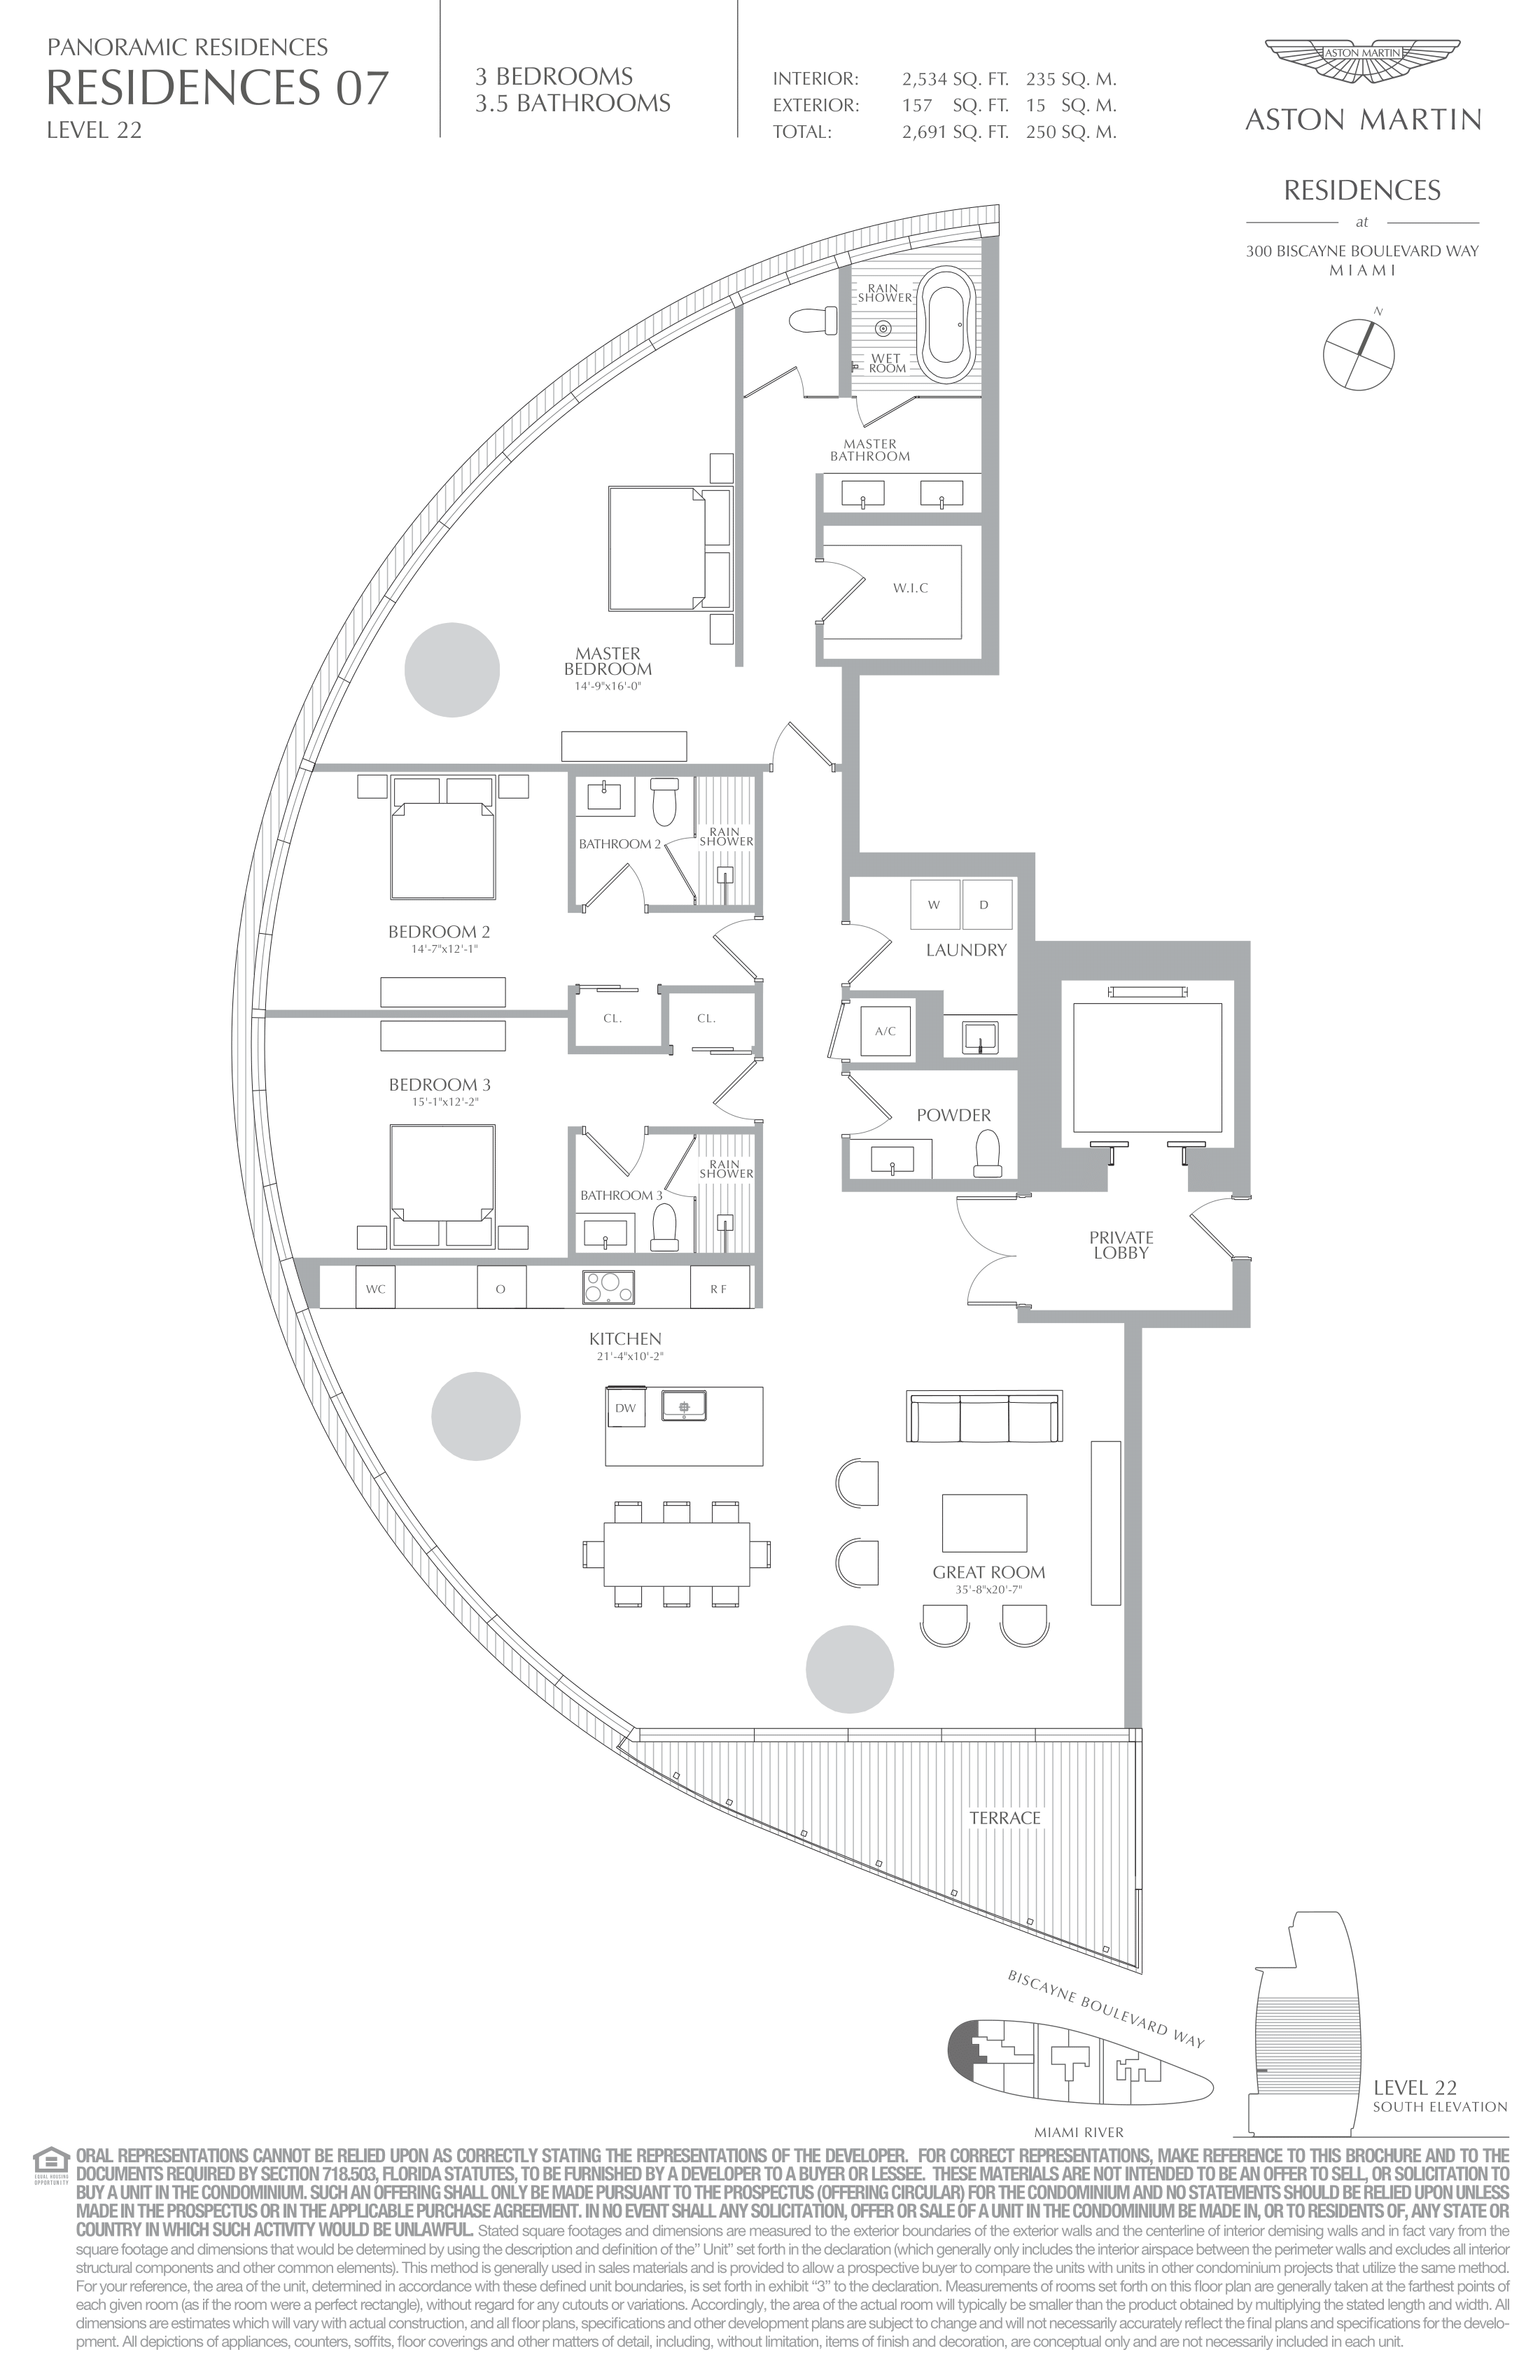 Residence 07 - Level 22